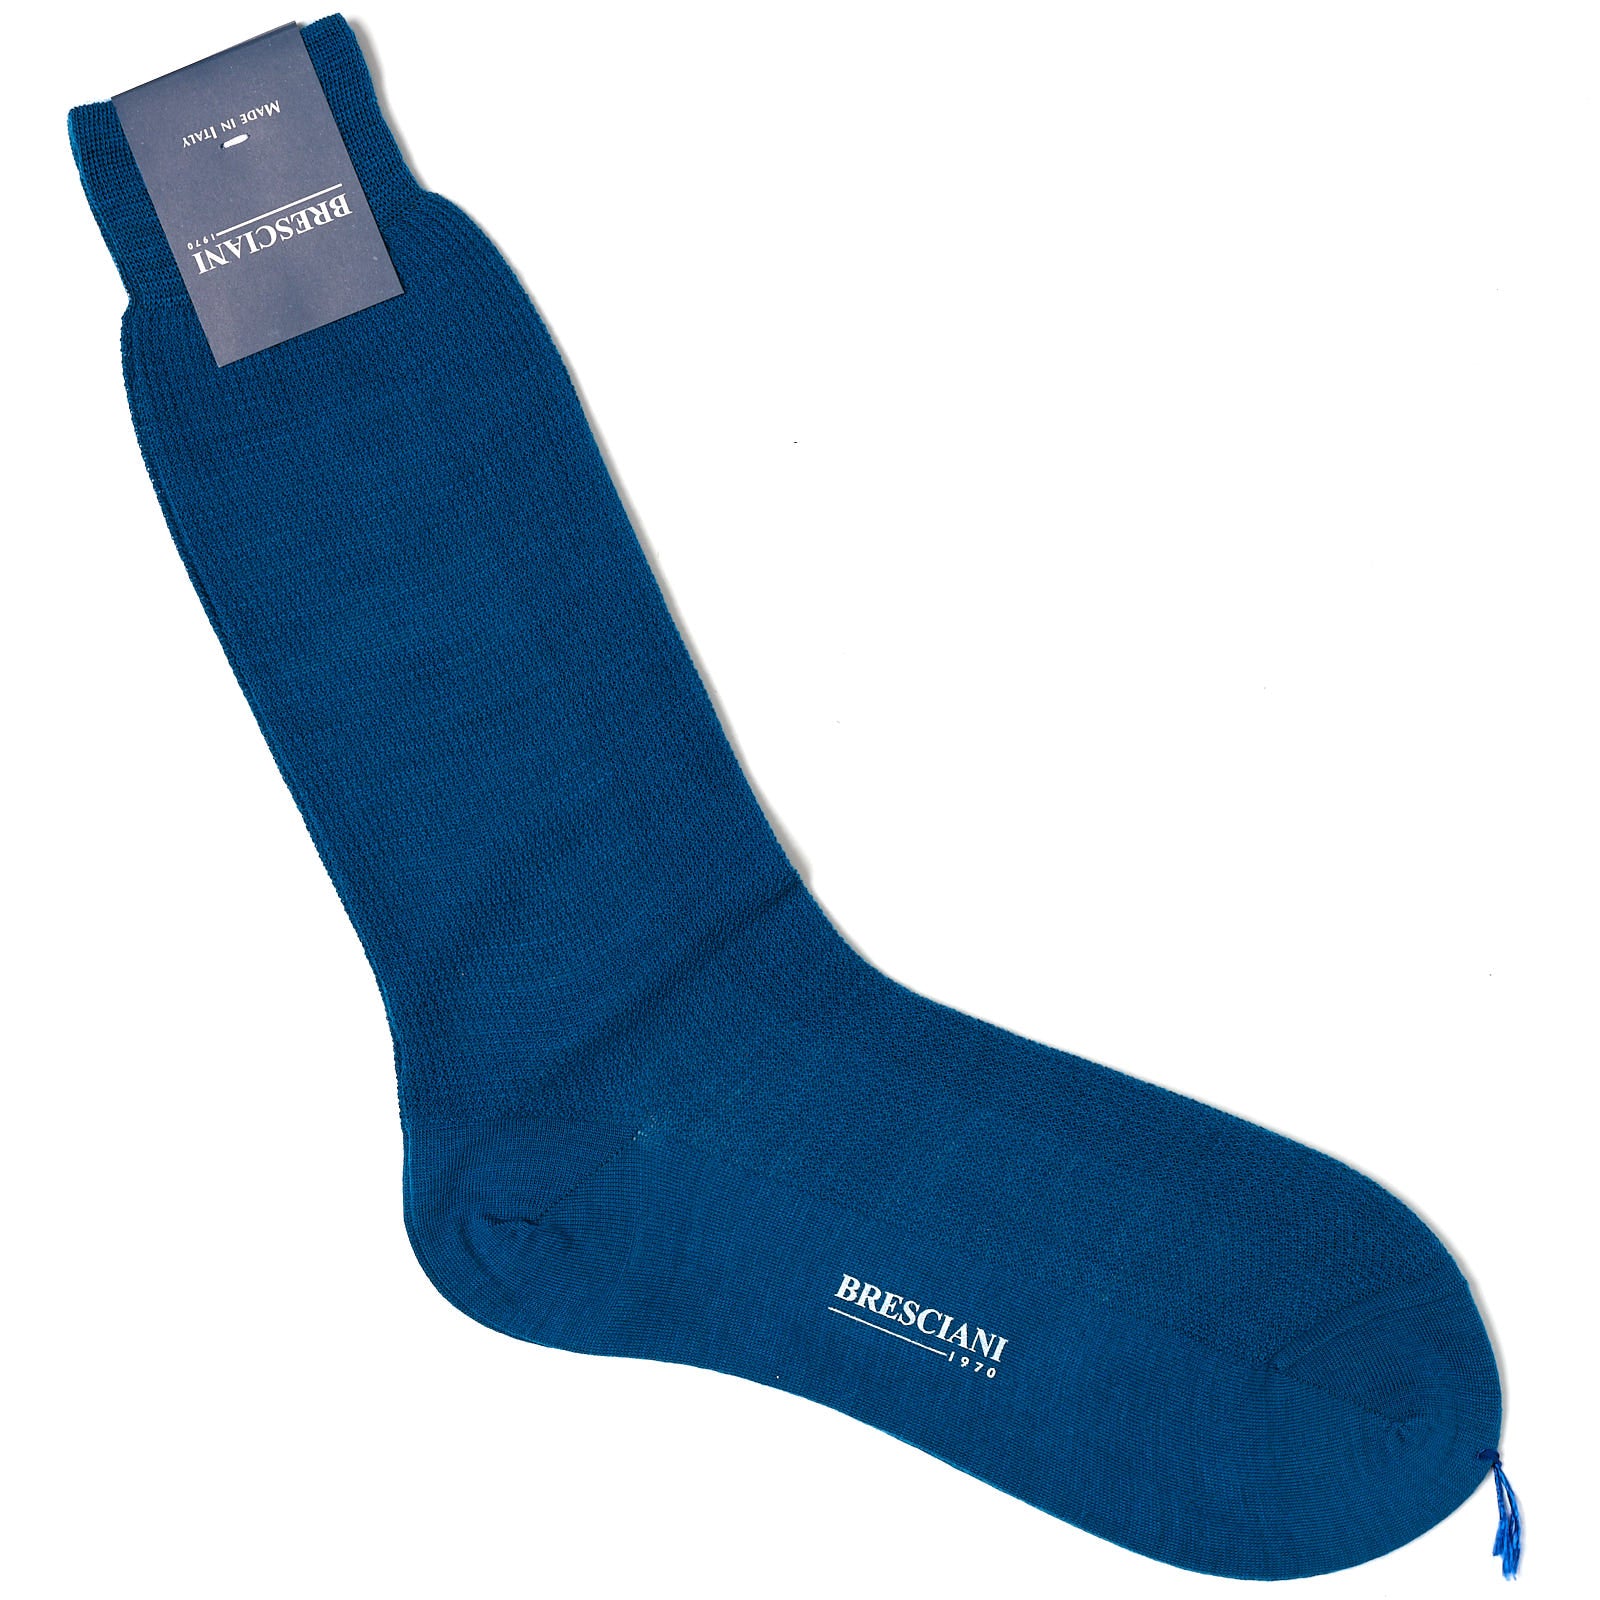 BRESCIANI Wool Micro-Design Mid Calf Length Socks US M-L